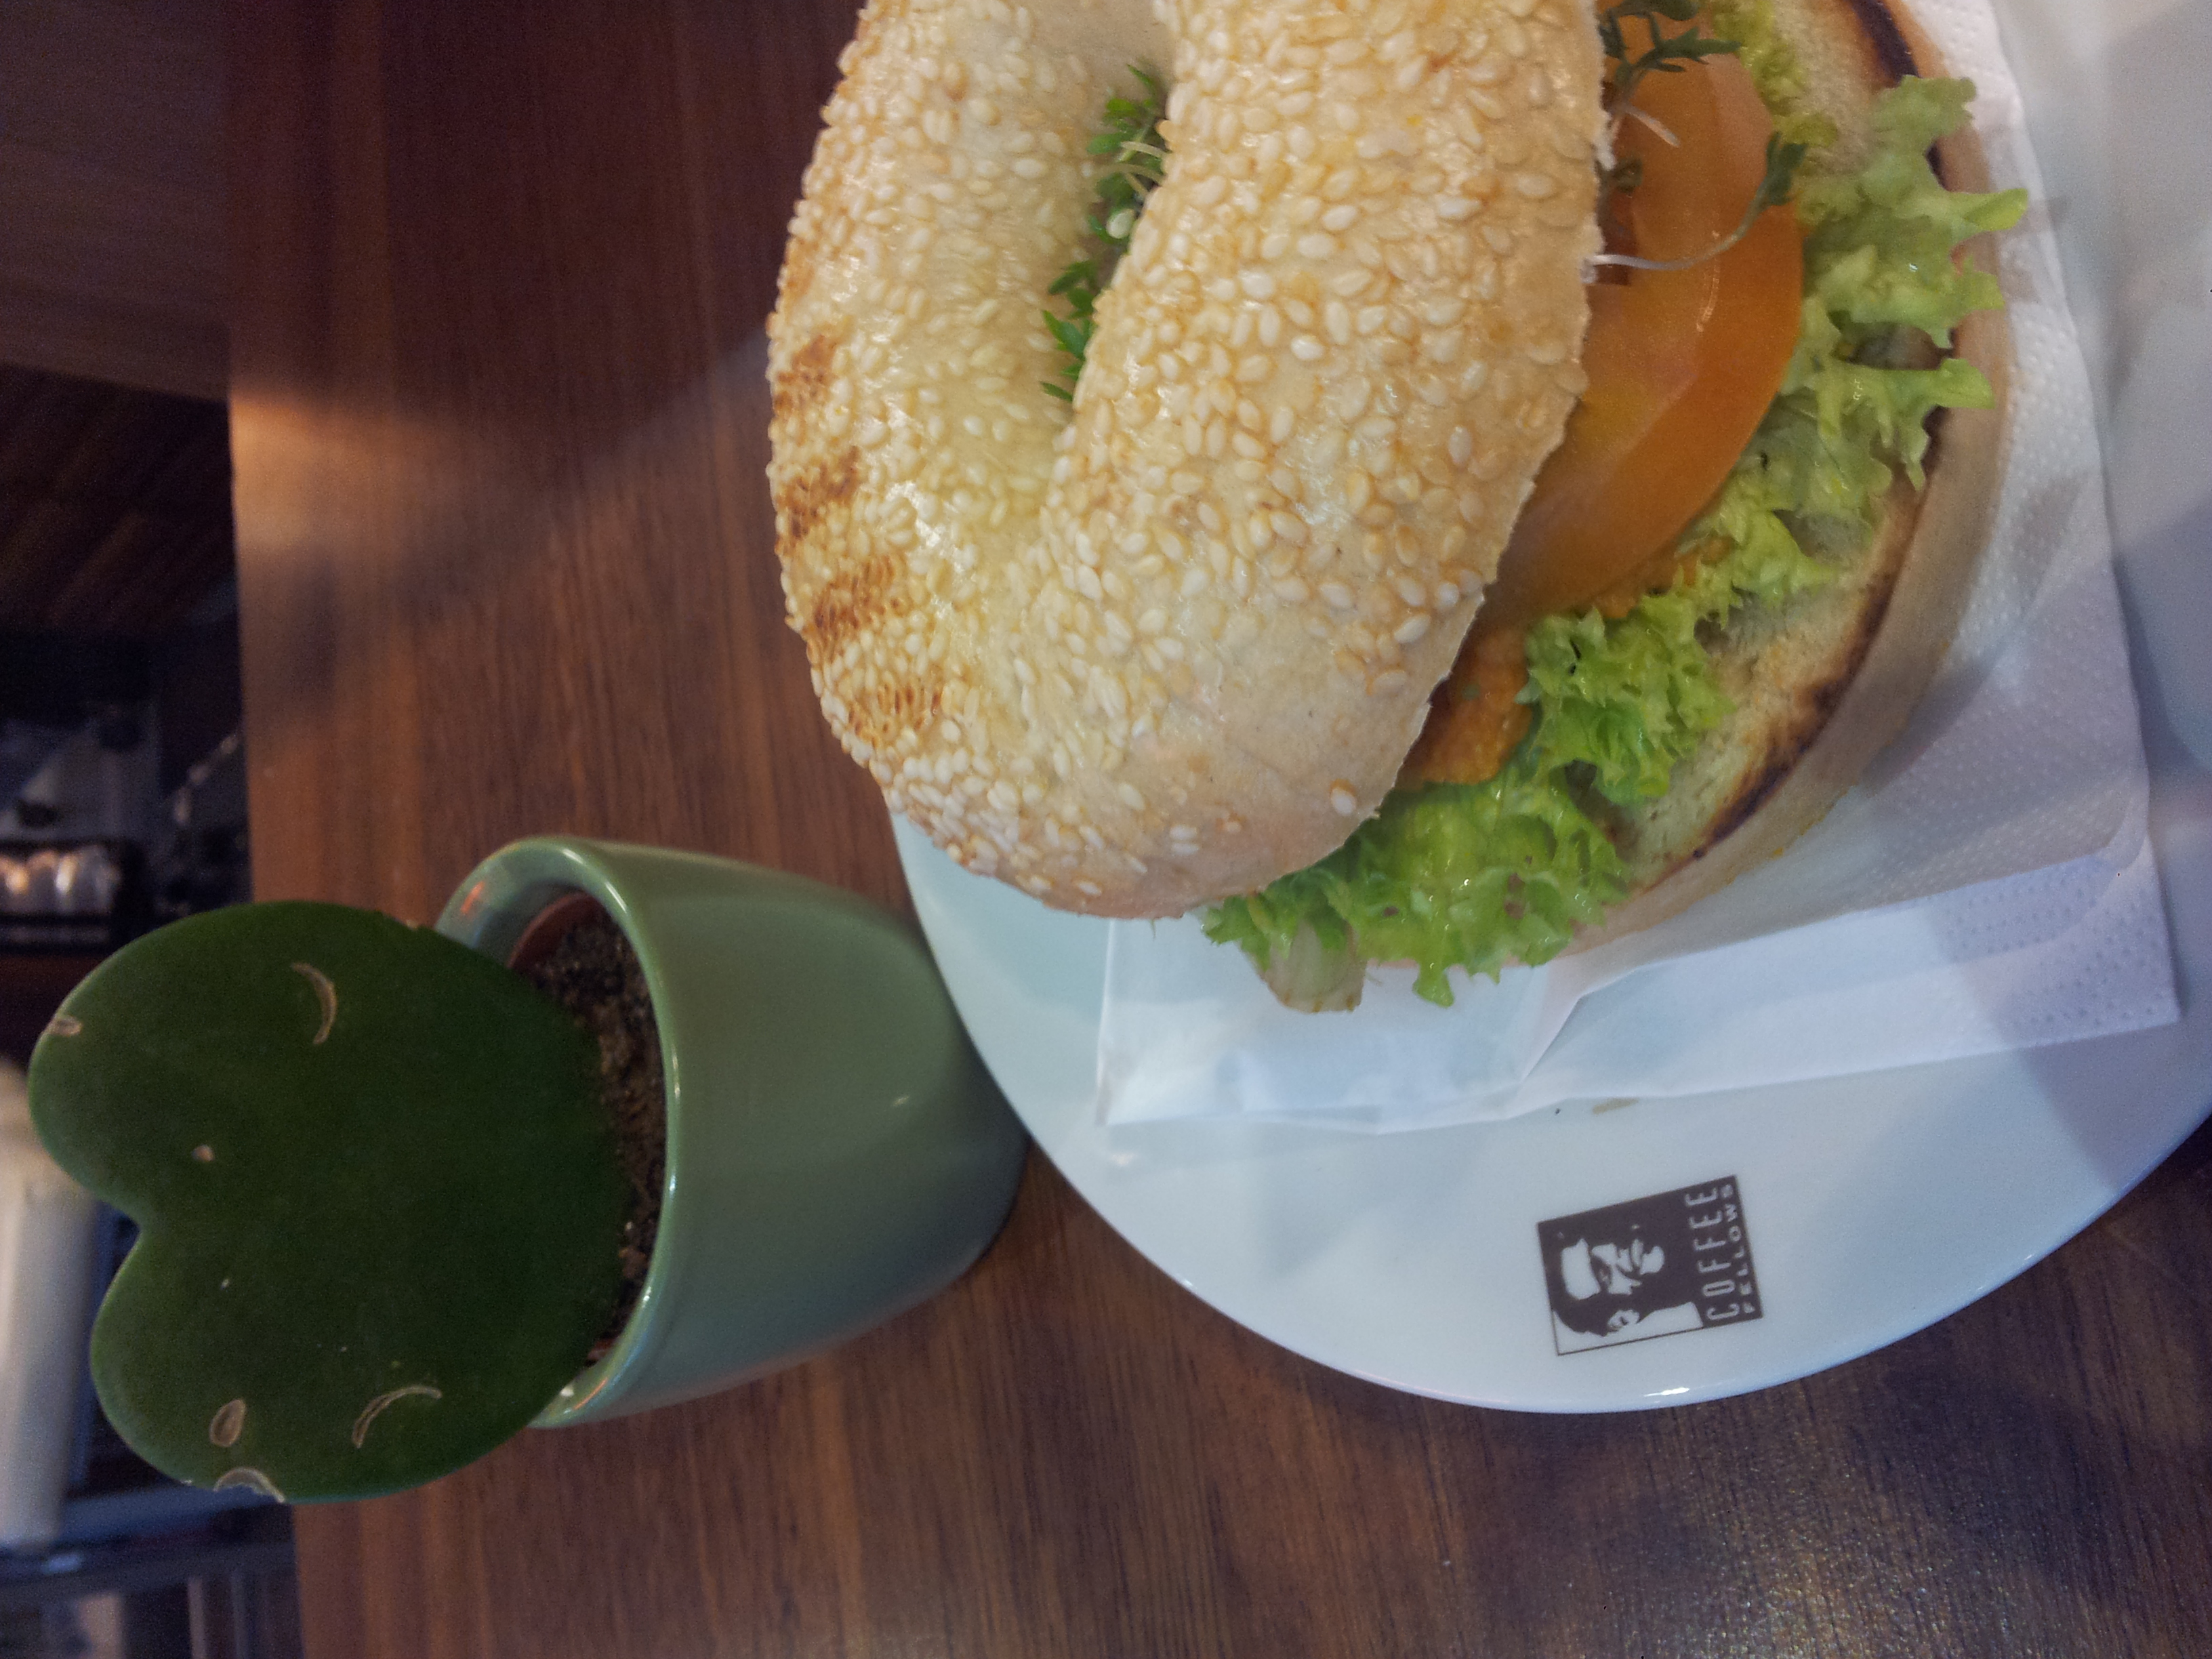 Veganer Avocado-Bagel,
3,90 Euro,
Bild leider verdreht. :(